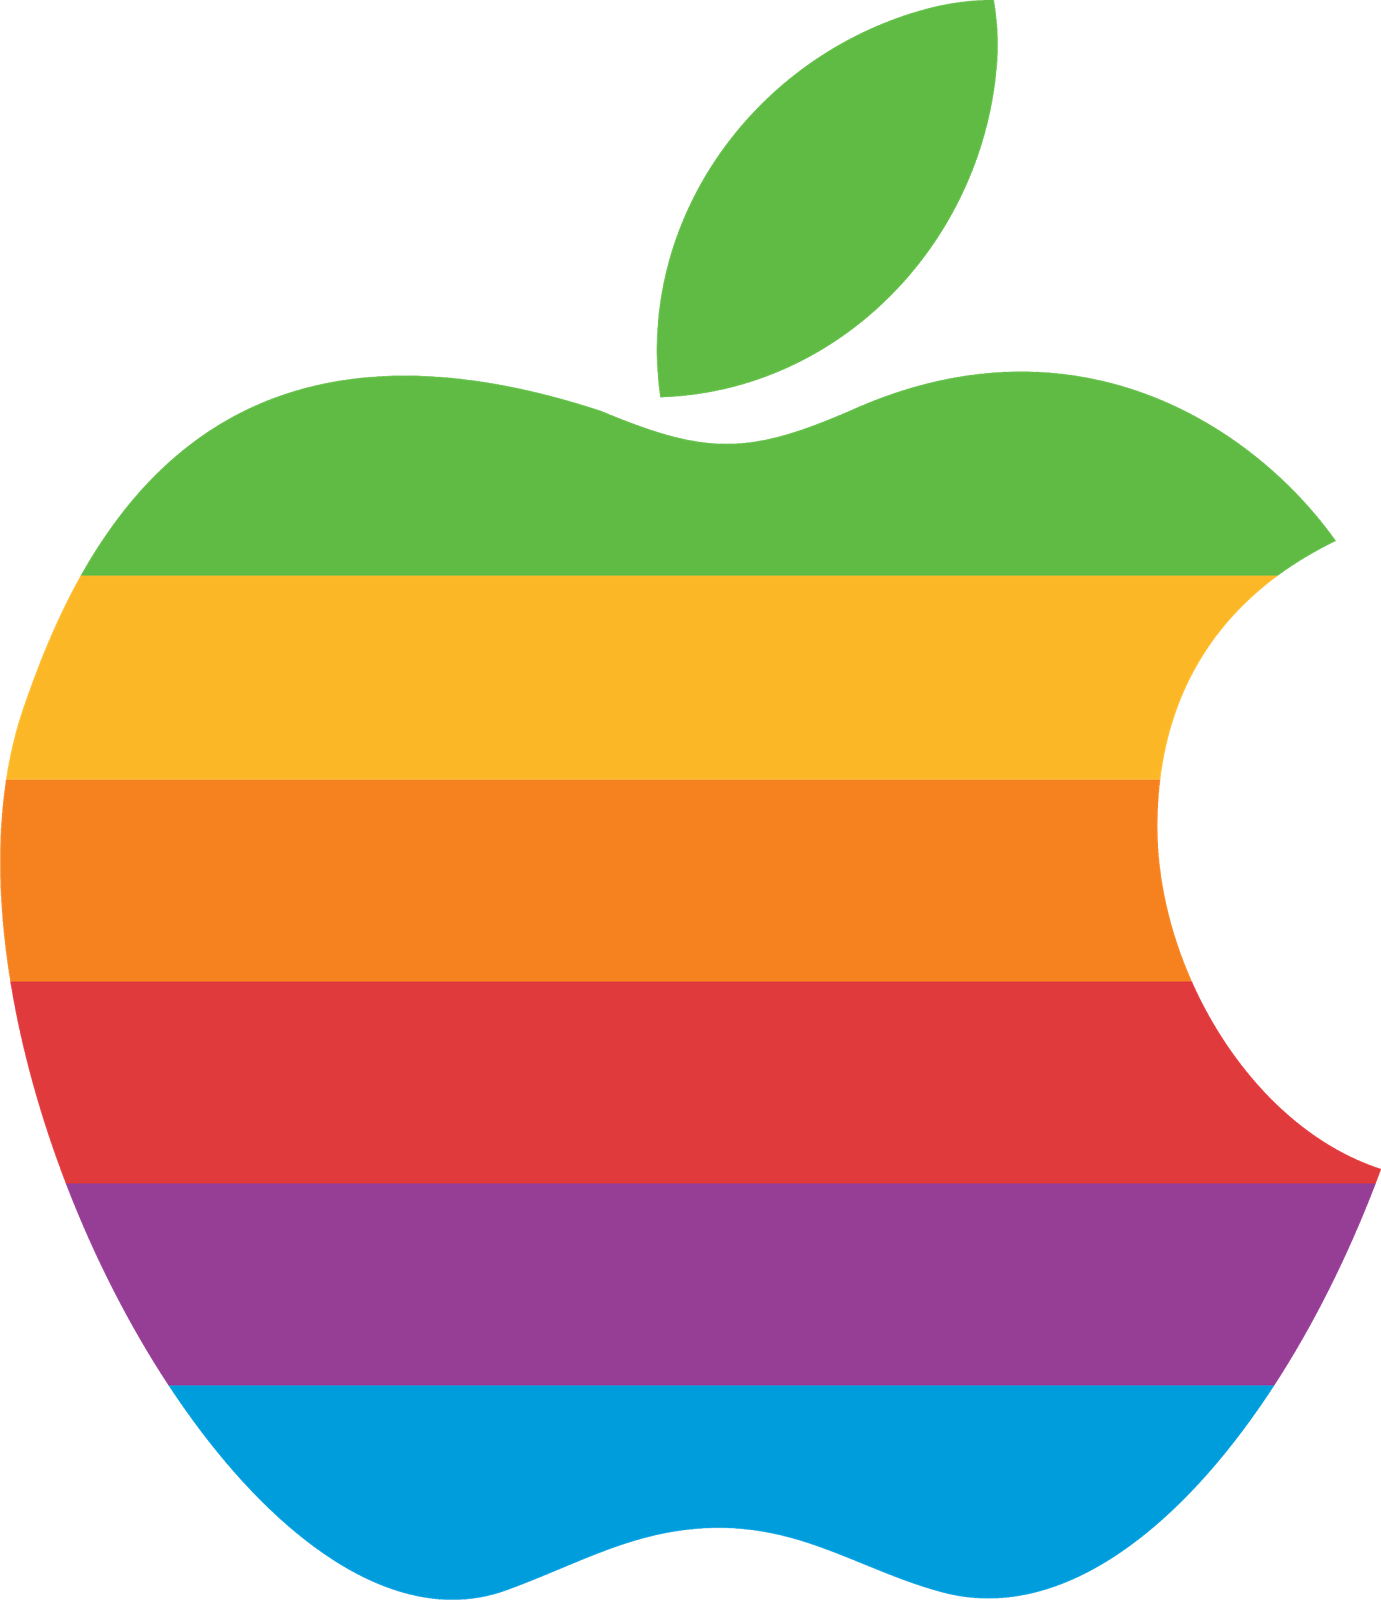 Apple logo Wallpaper